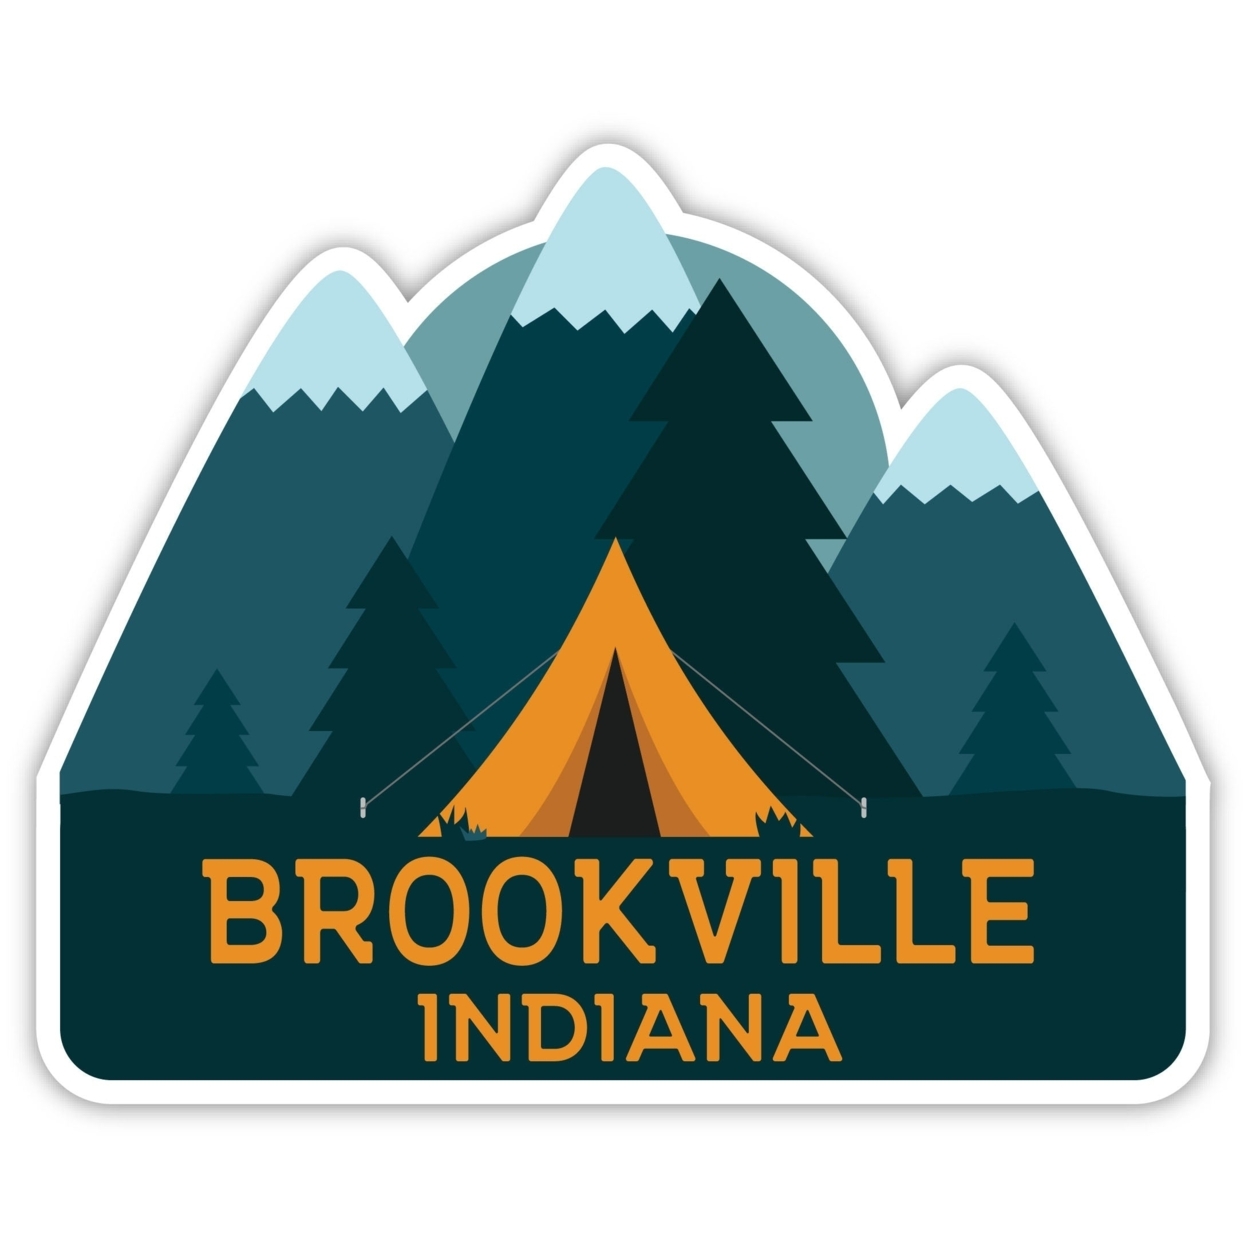 Brookville Indiana Souvenir Decorative Stickers (Choose Theme And Size) - Single Unit, 10-Inch, Adventures Awaits